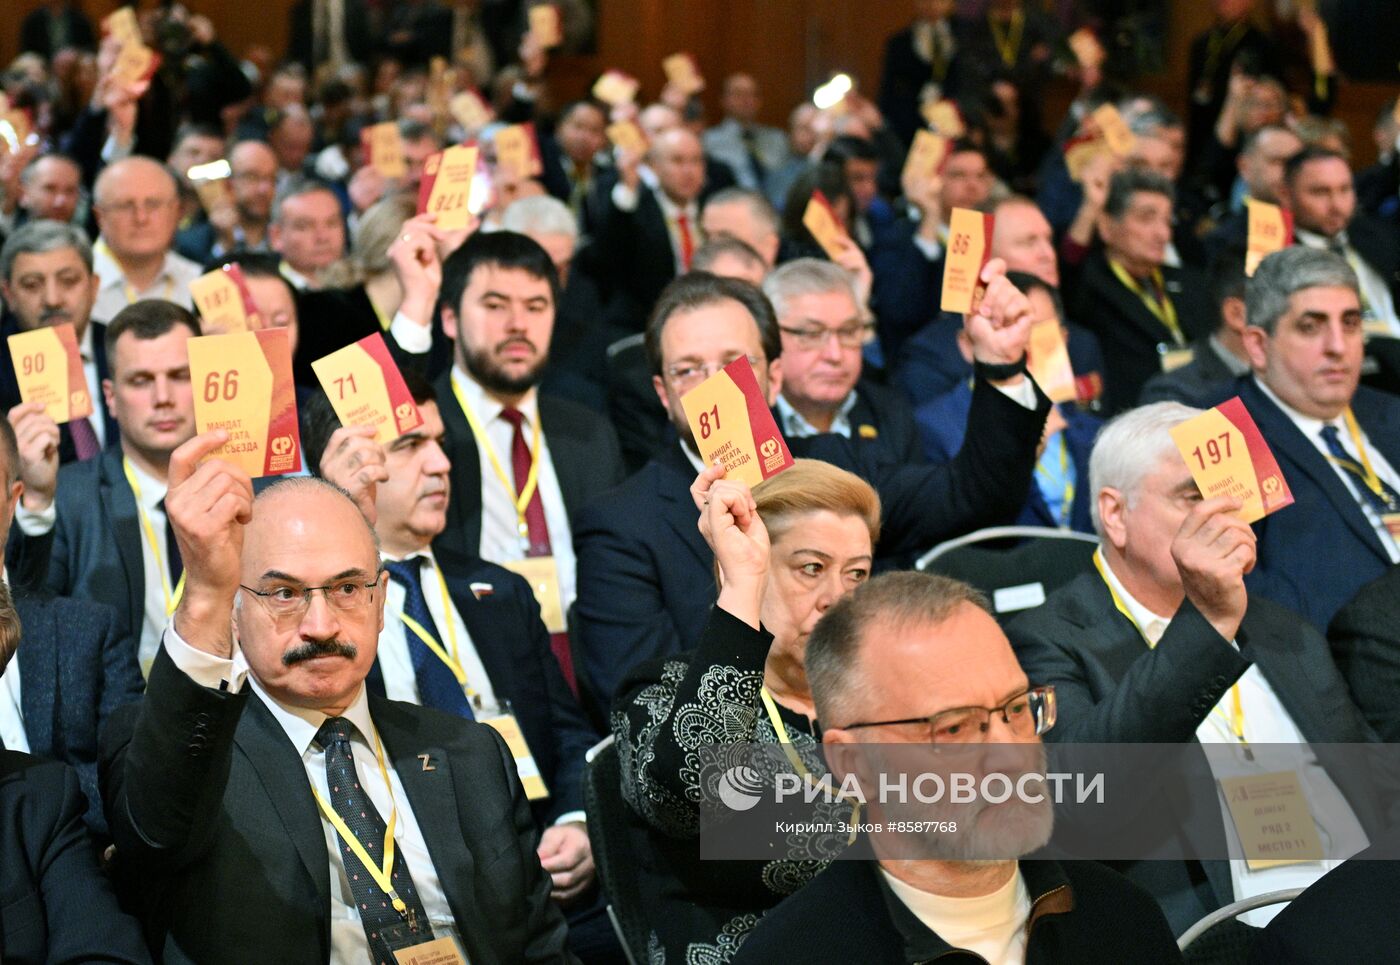 XIII Съезд партии "Справедливая Россия - за правду" 